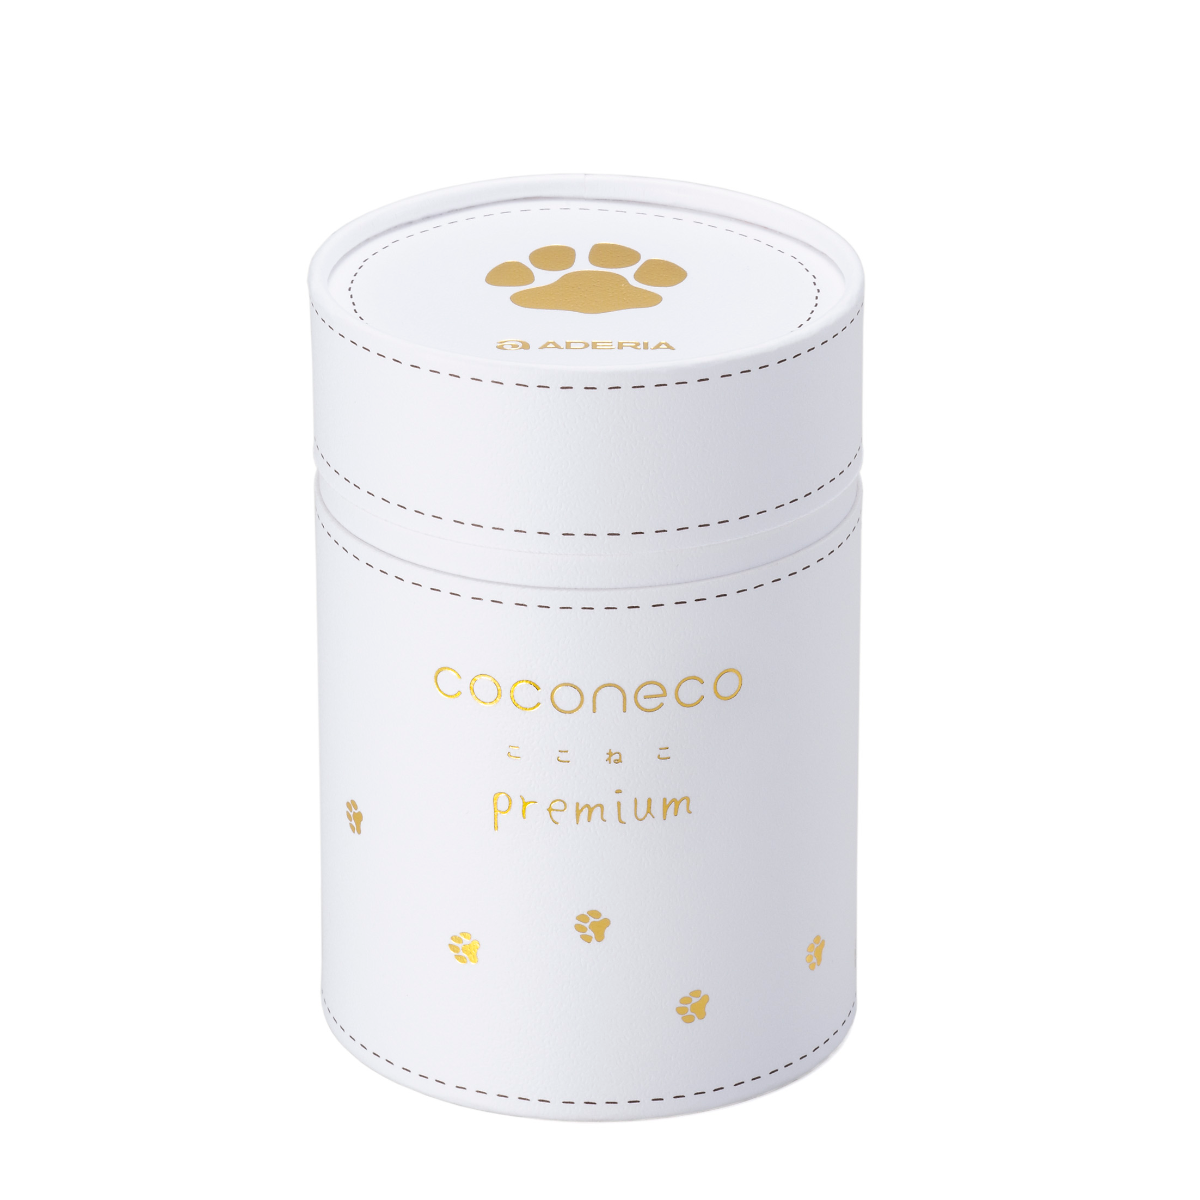 Coconeco Golden Colour Glass - 300 ml - Premium Gift Box / ココネコ プレミアムグラス